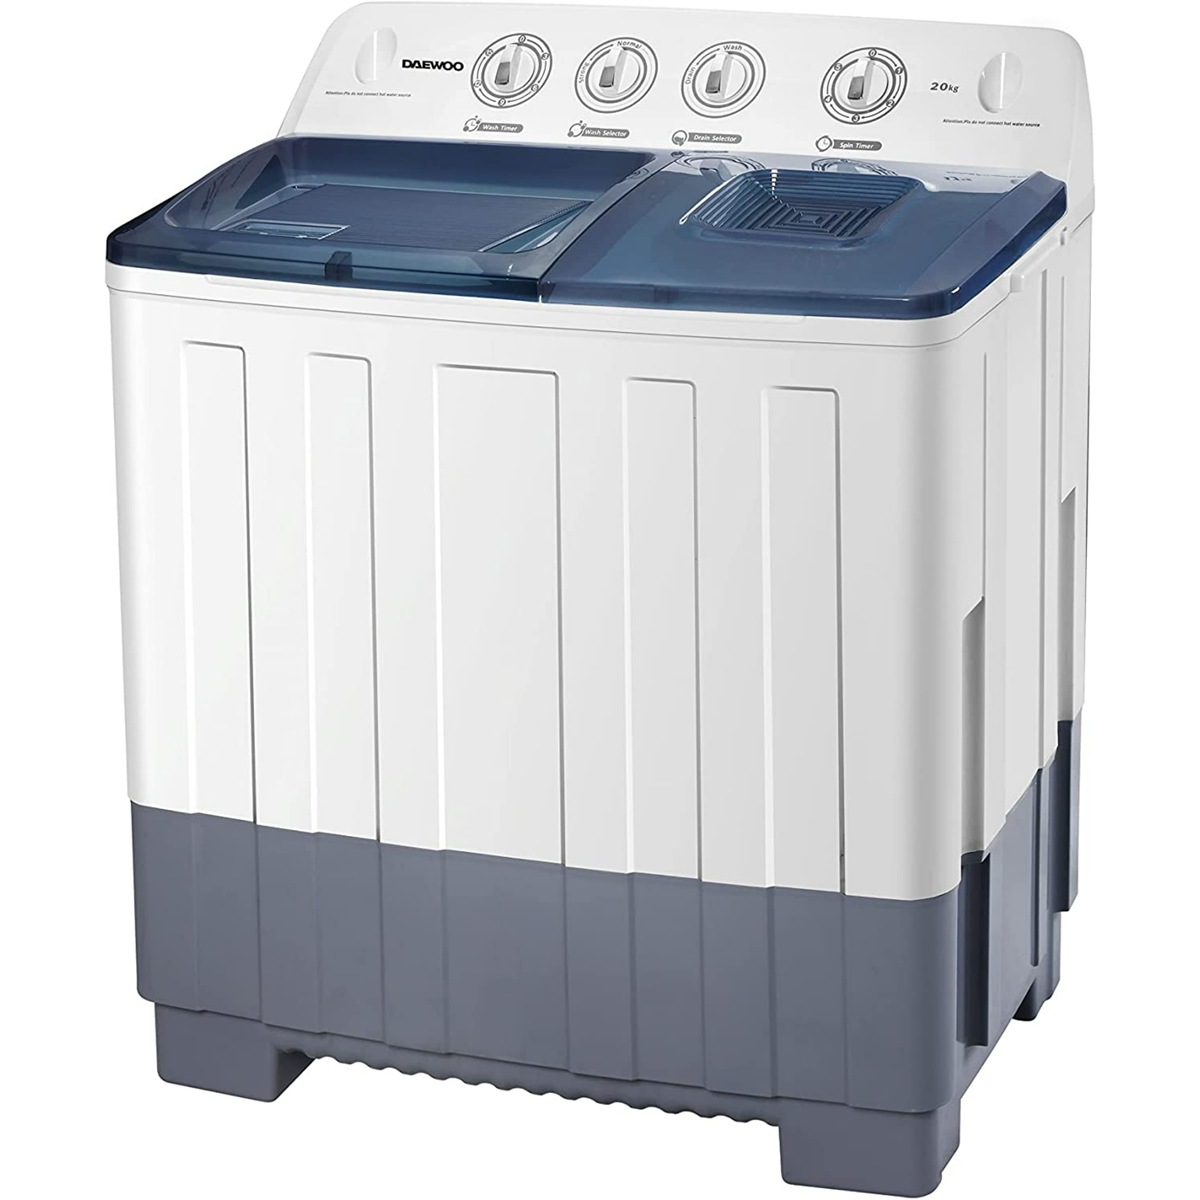 Daewoo Twin Tub Semi Automatic Washing Machine, 20 Kg, White, DW-T201WD